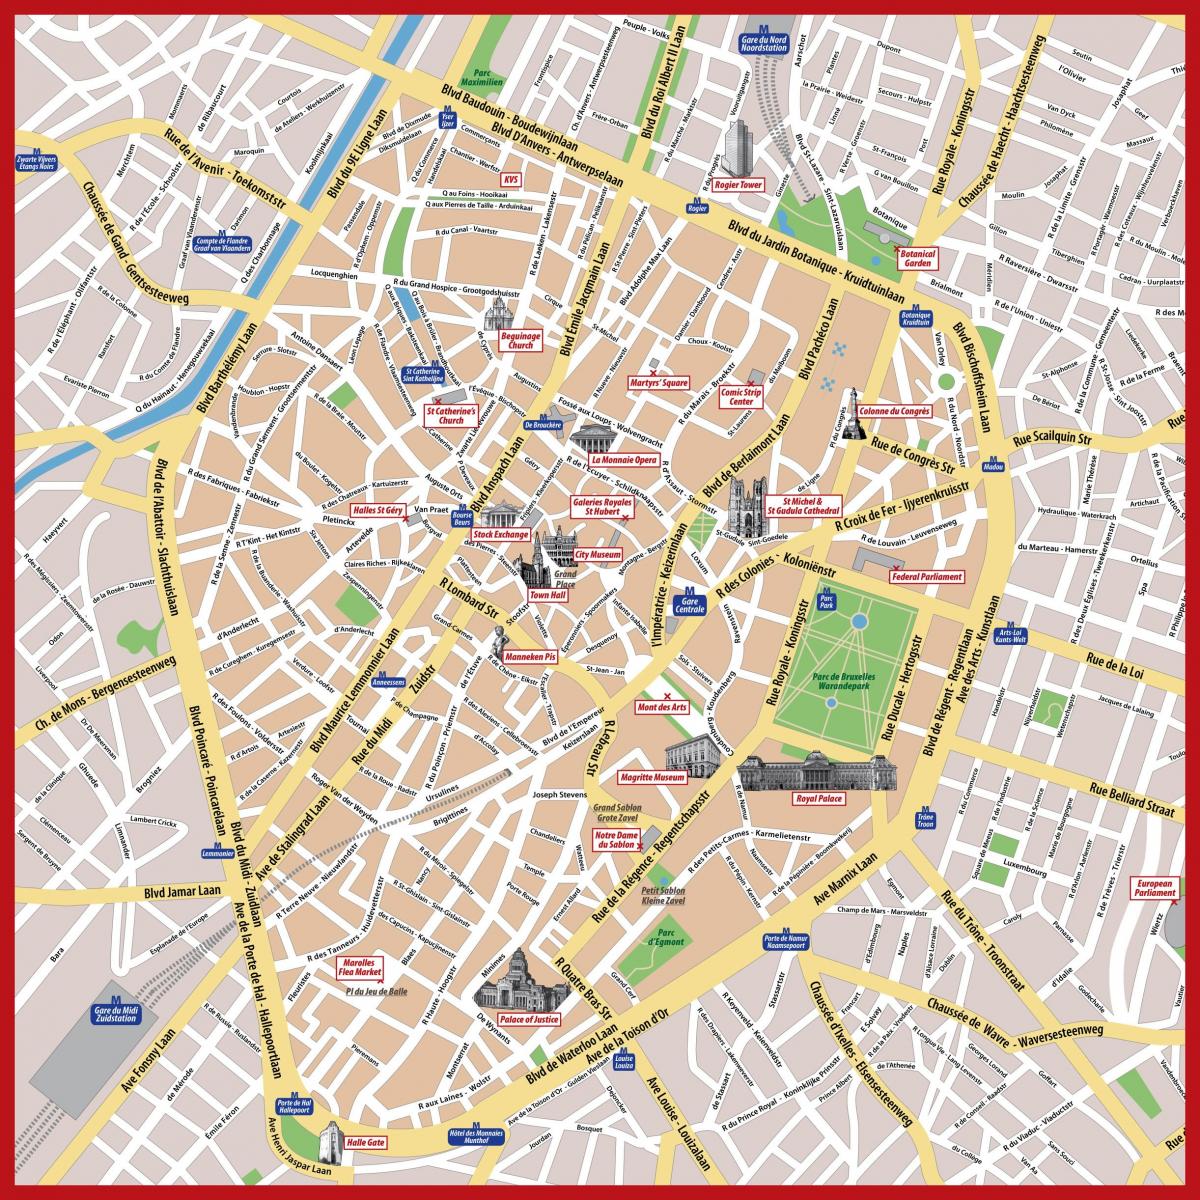 Brussels walking tour map